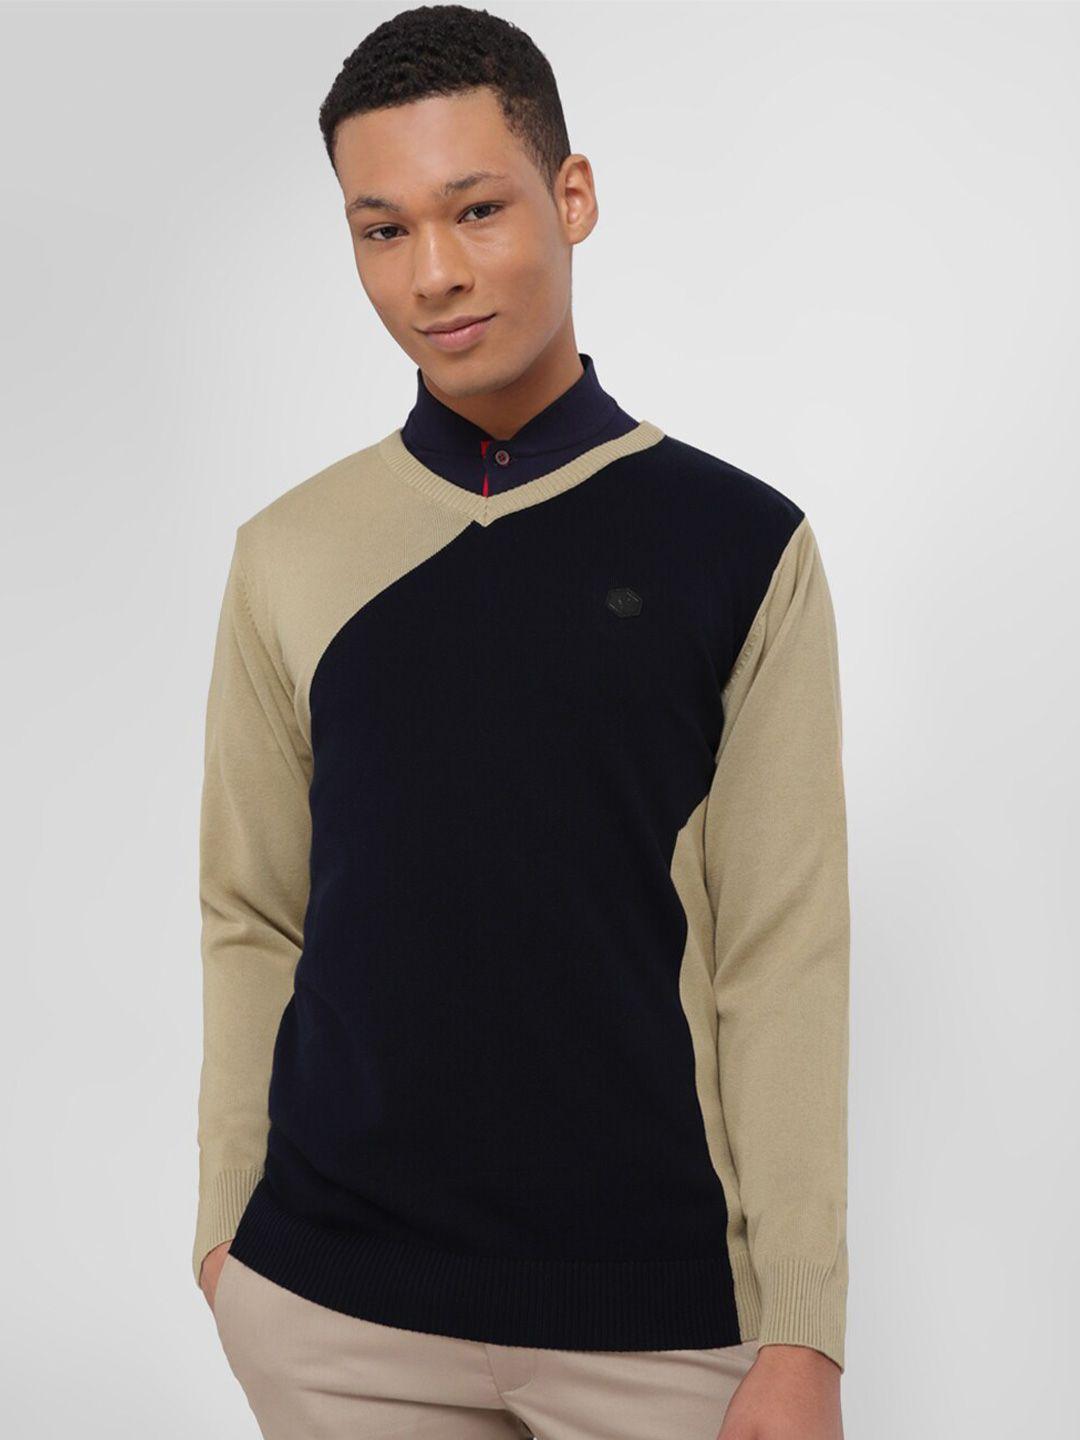 allen solly colourblocked v-neck long sleeves cotton pullover sweater